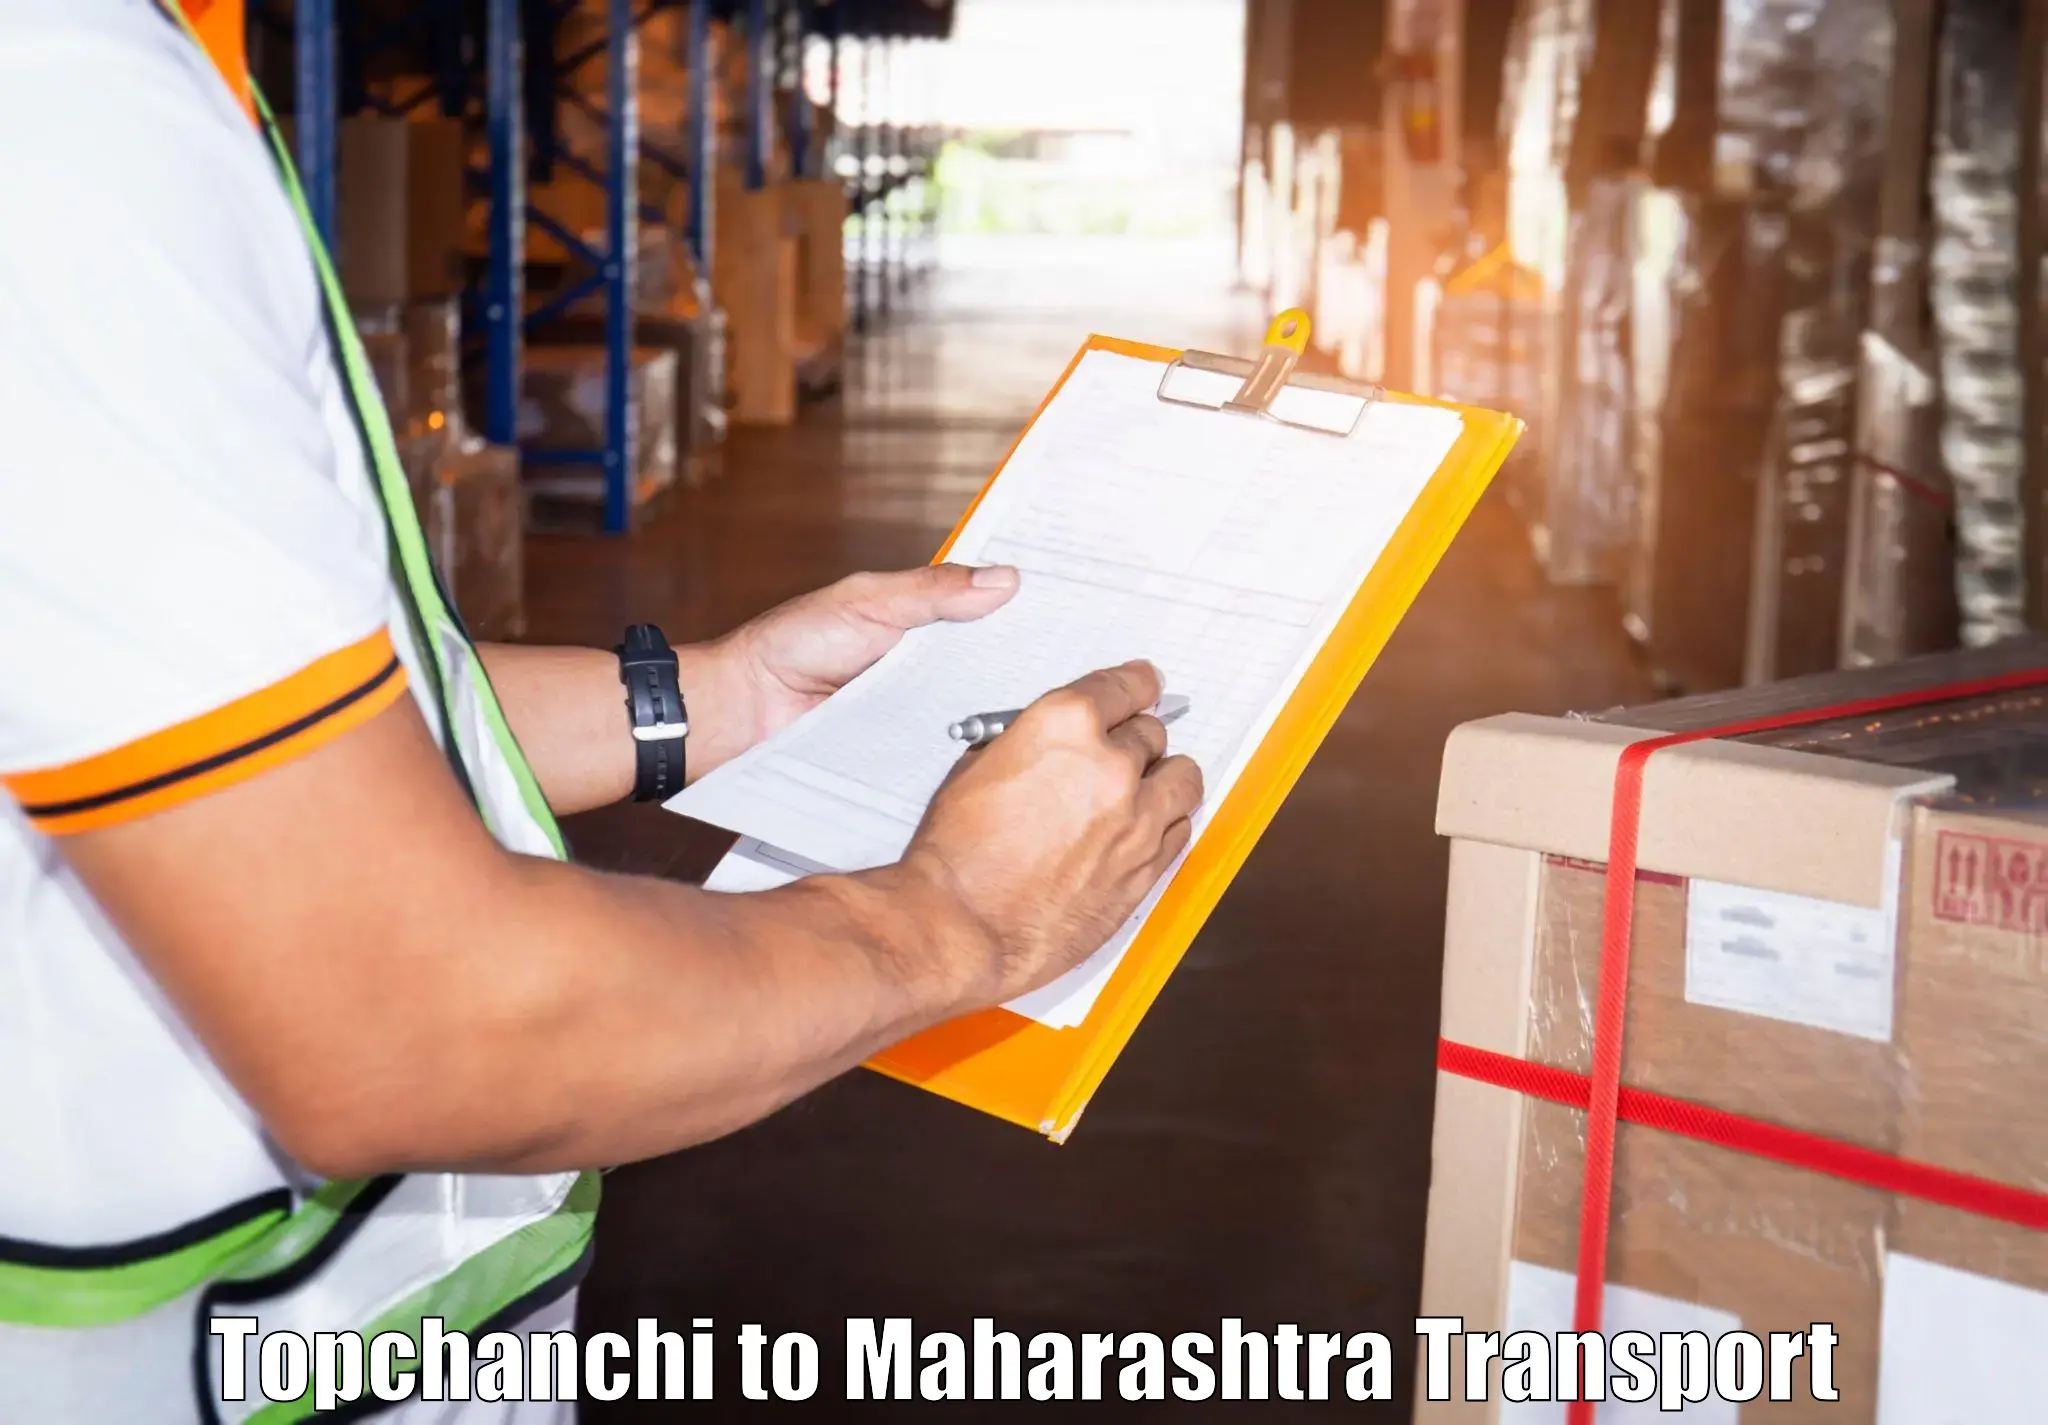 Bike transport service Topchanchi to Maharashtra